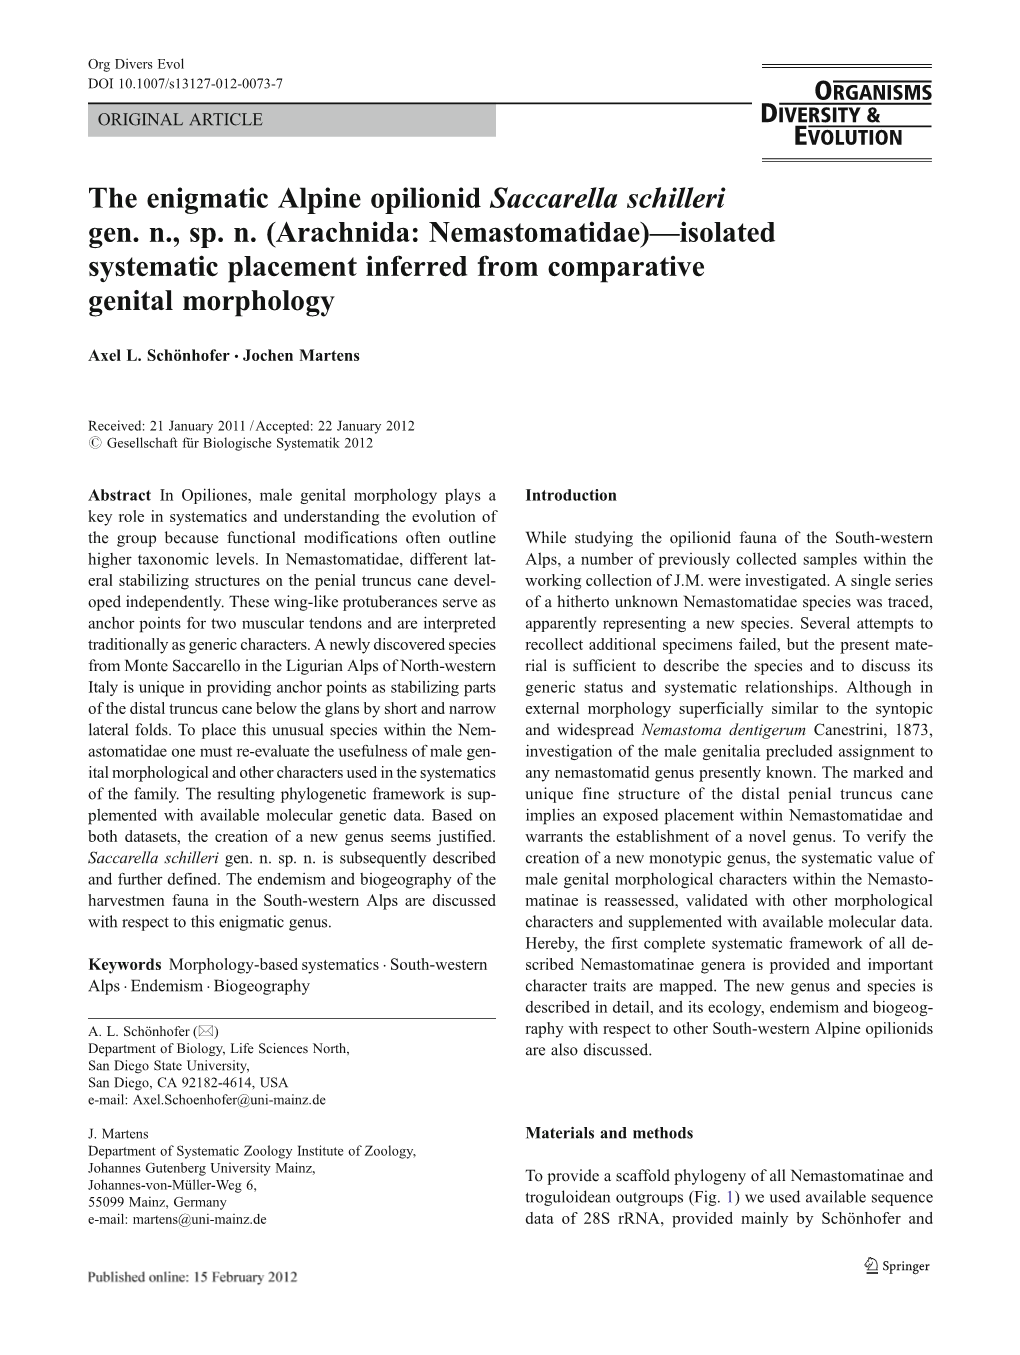 The Enigmatic Alpine Opilionid Saccarella Schilleri Gen